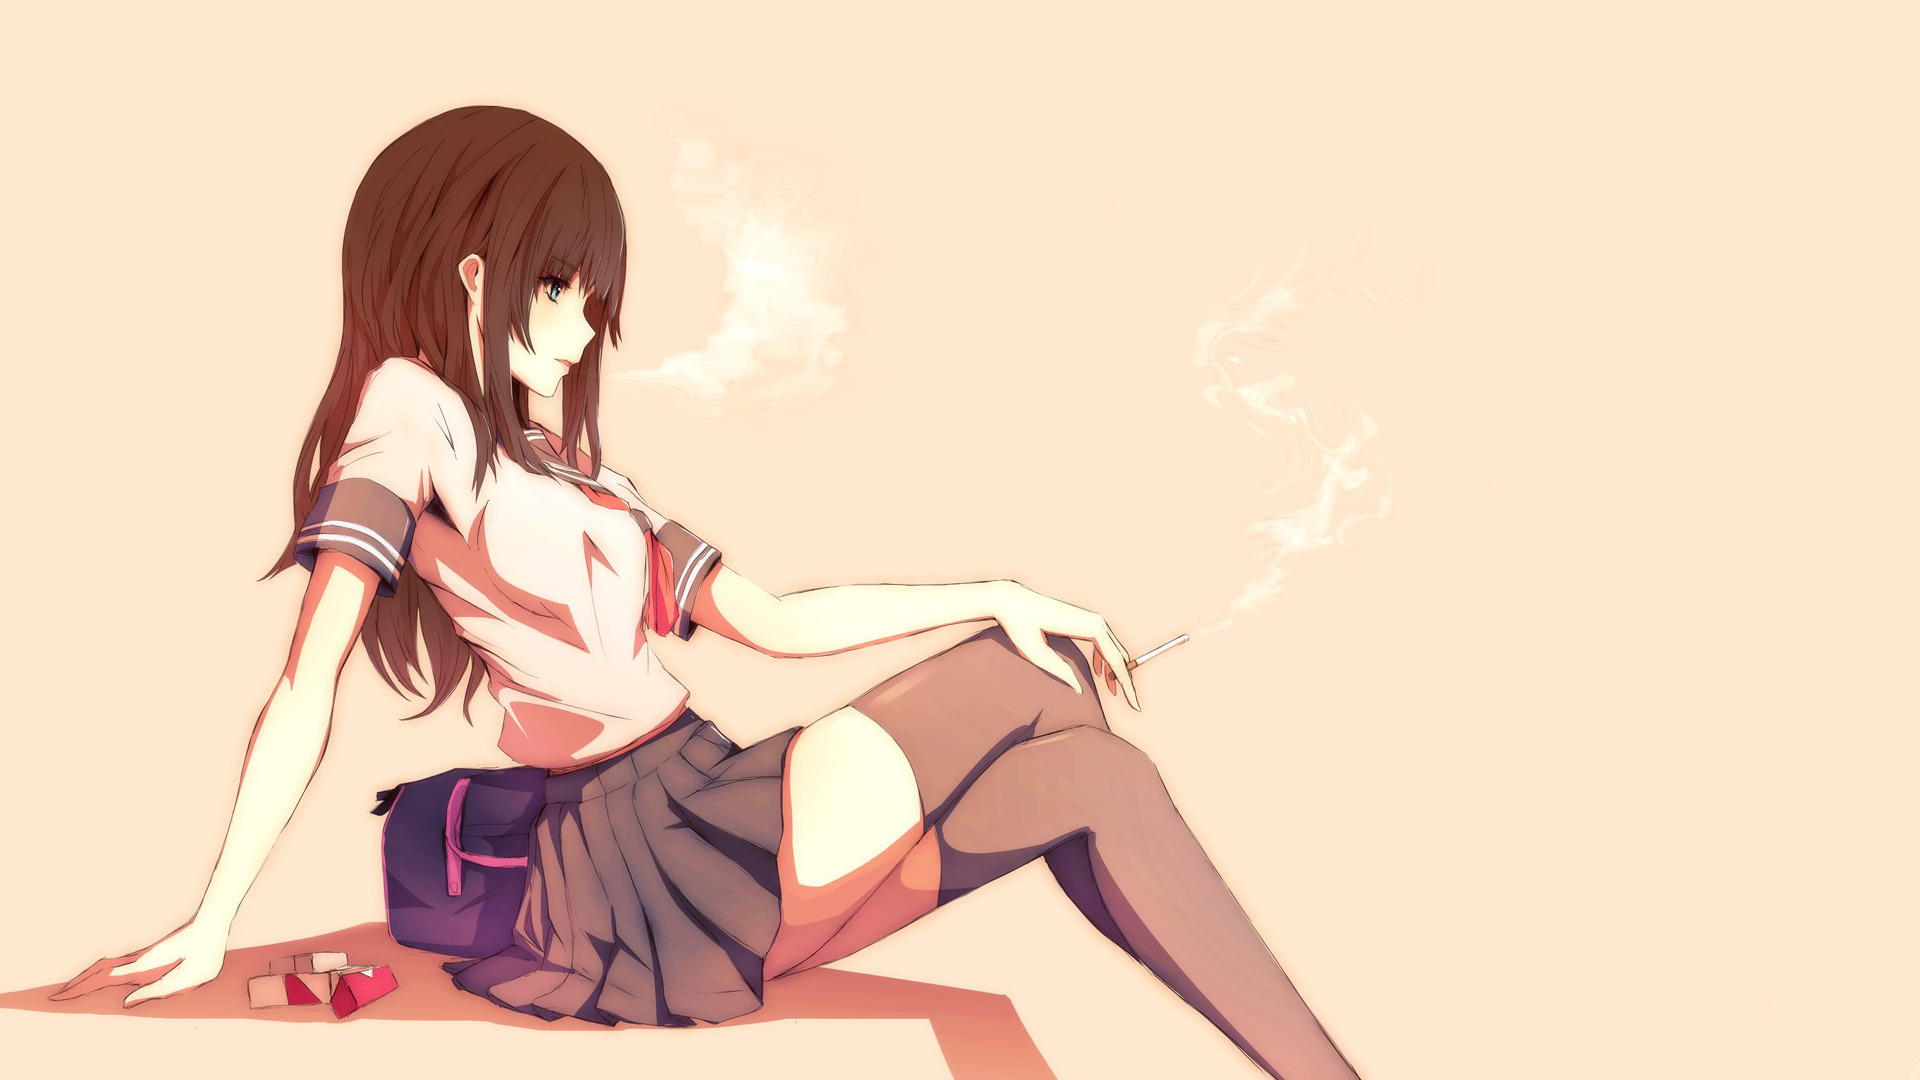 smoking anime girls school uniform simple merontomari thigh highs wallpapers hd desktop and mobile backgrounds